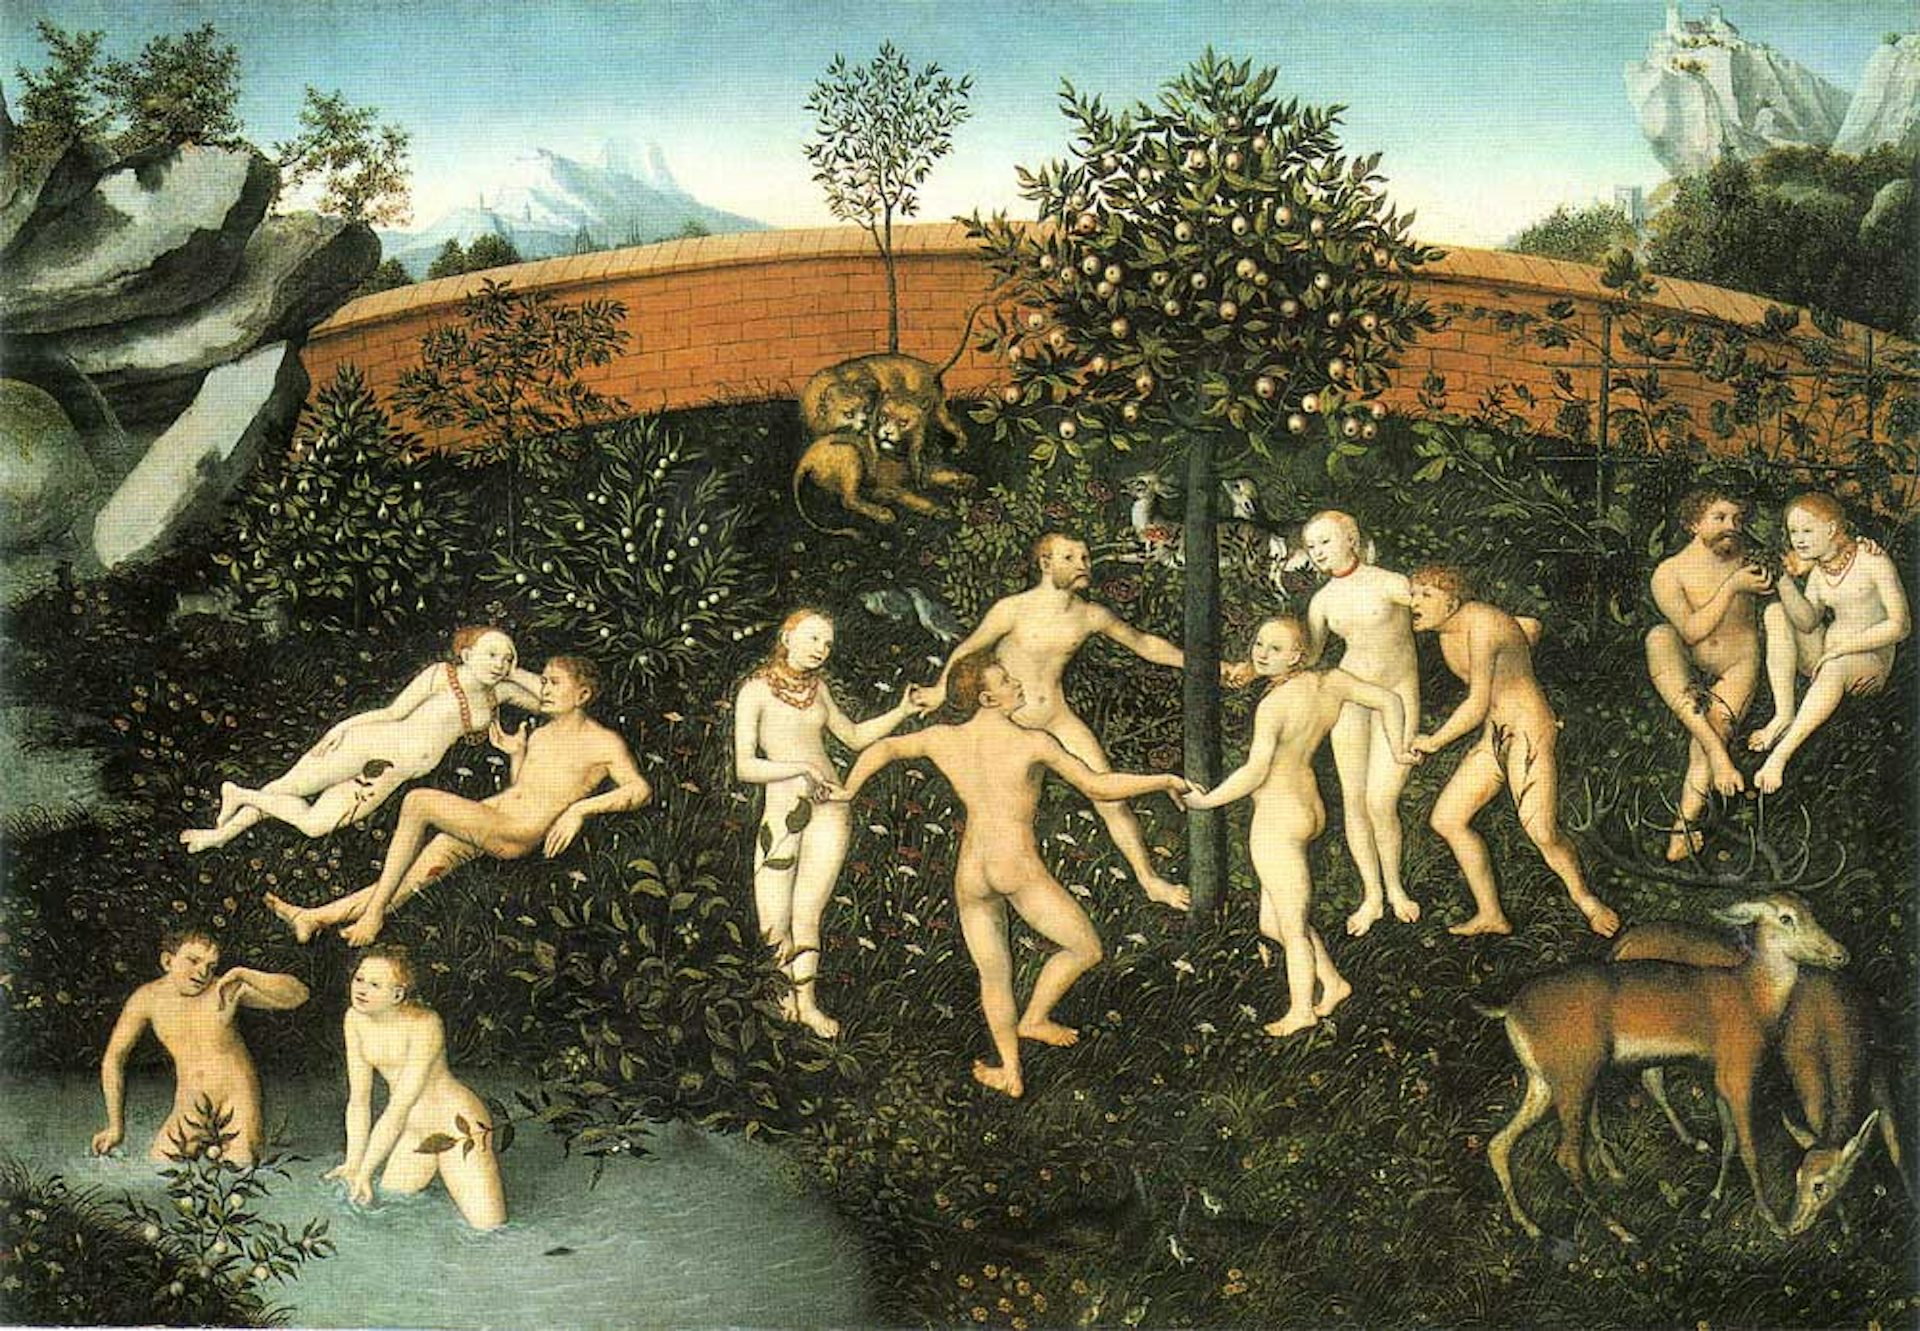 The Golden Age by Lucas Cranach the Elder